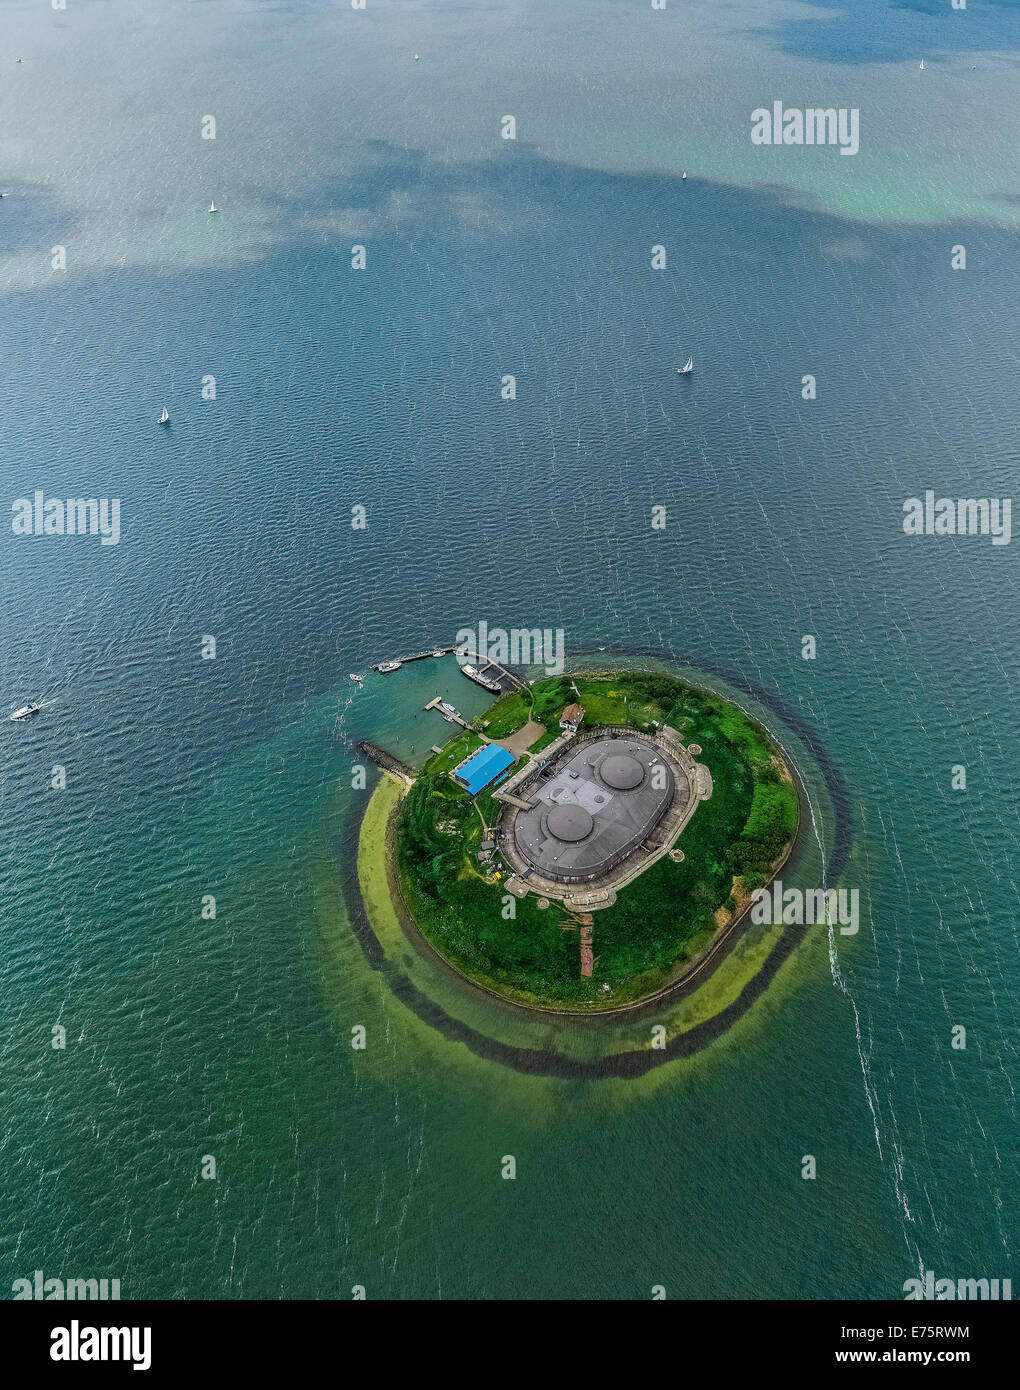 Vista aerea, Forteiland Pampus o Fort Pampus isola, isola artificiale nel IJmeer, Provincia di North-Holland, Paesi Bassi Foto Stock